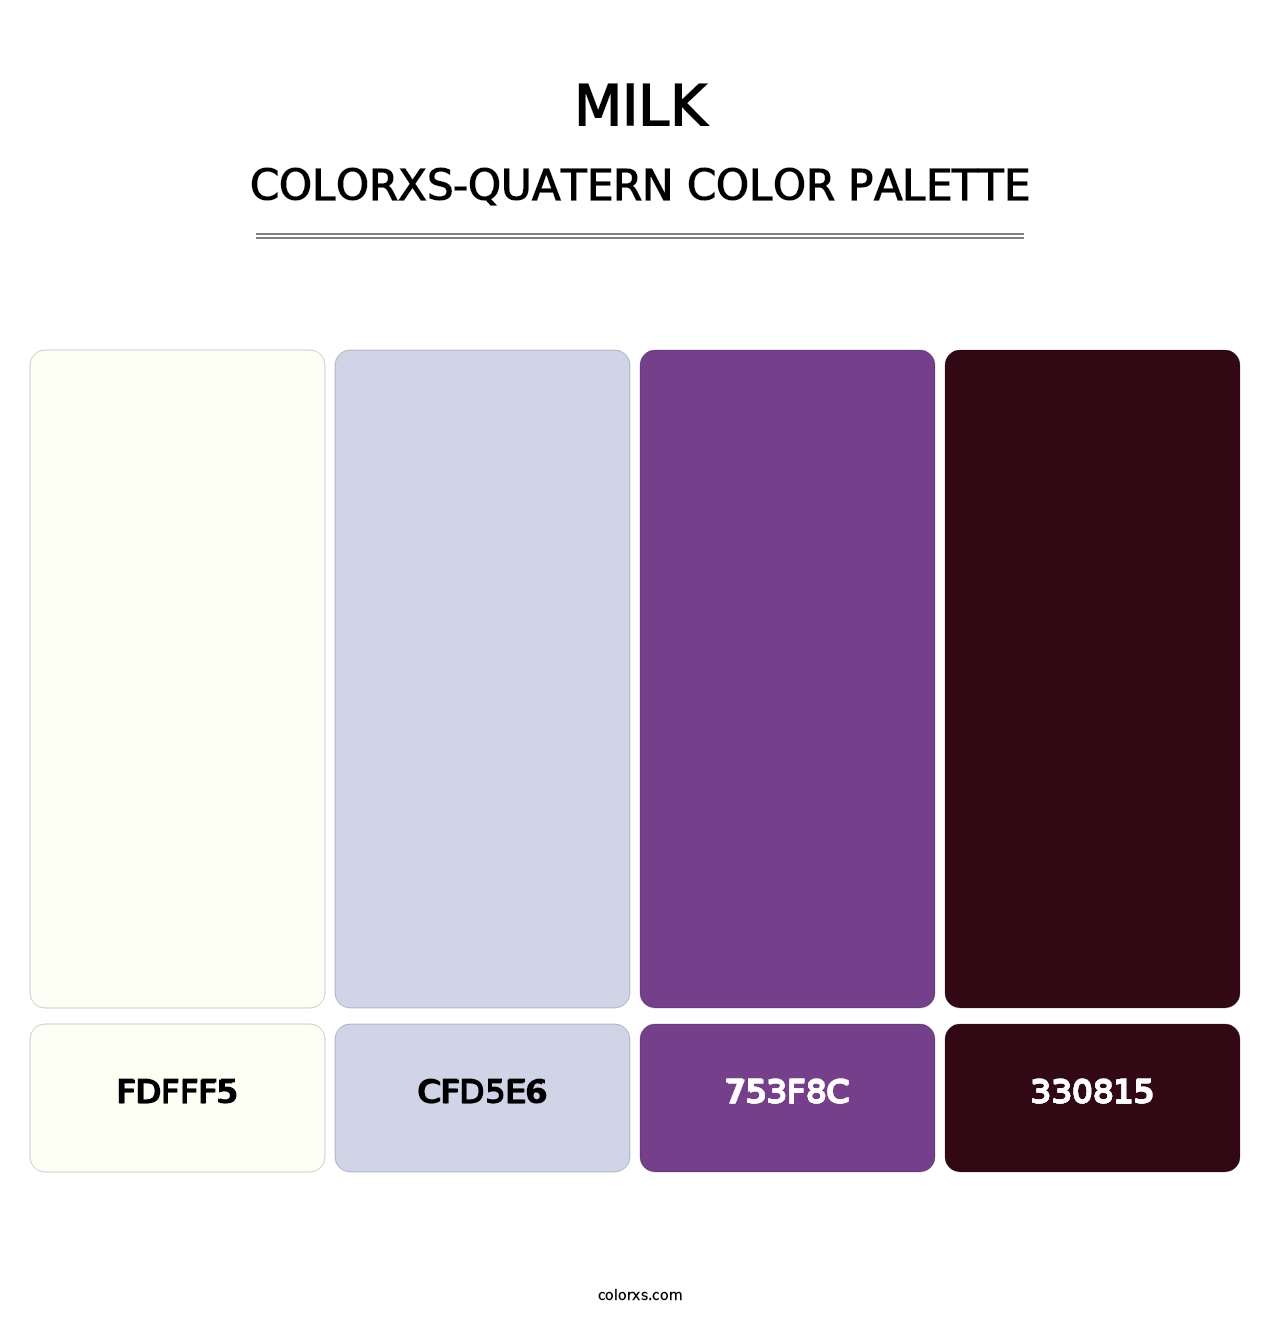 Milk - Colorxs Quatern Palette